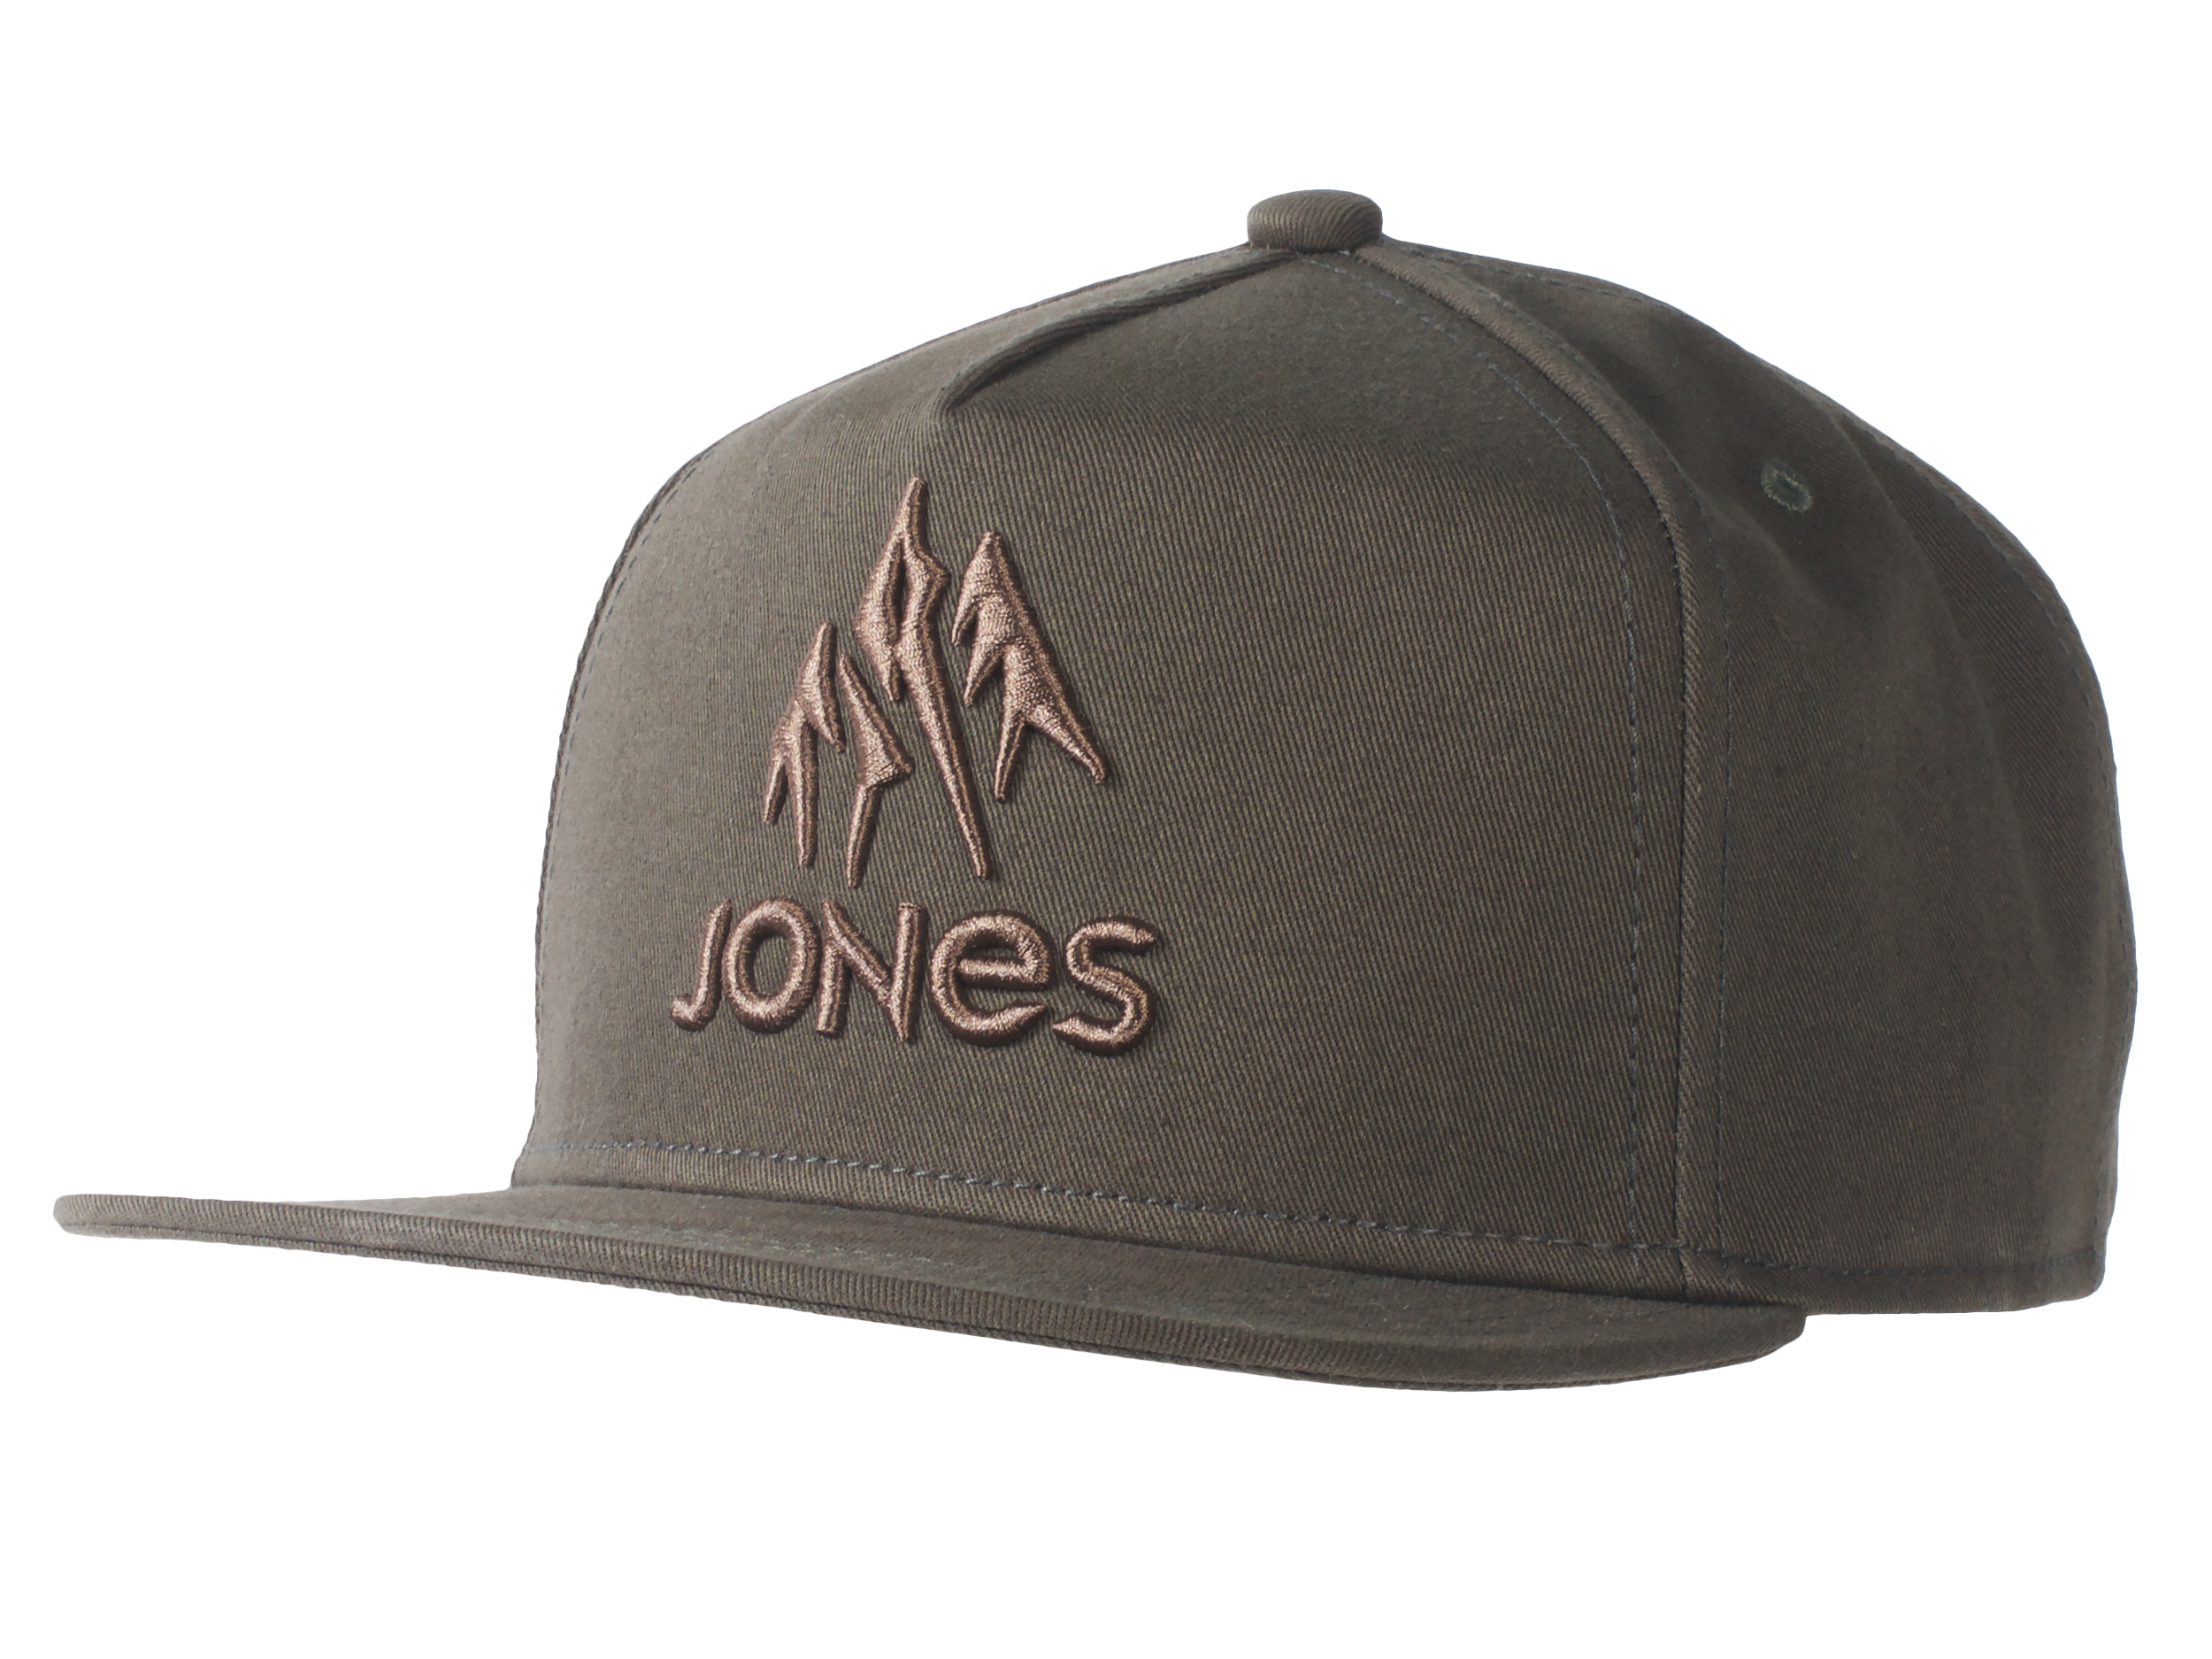 5. Jones Jackson Cap Olive